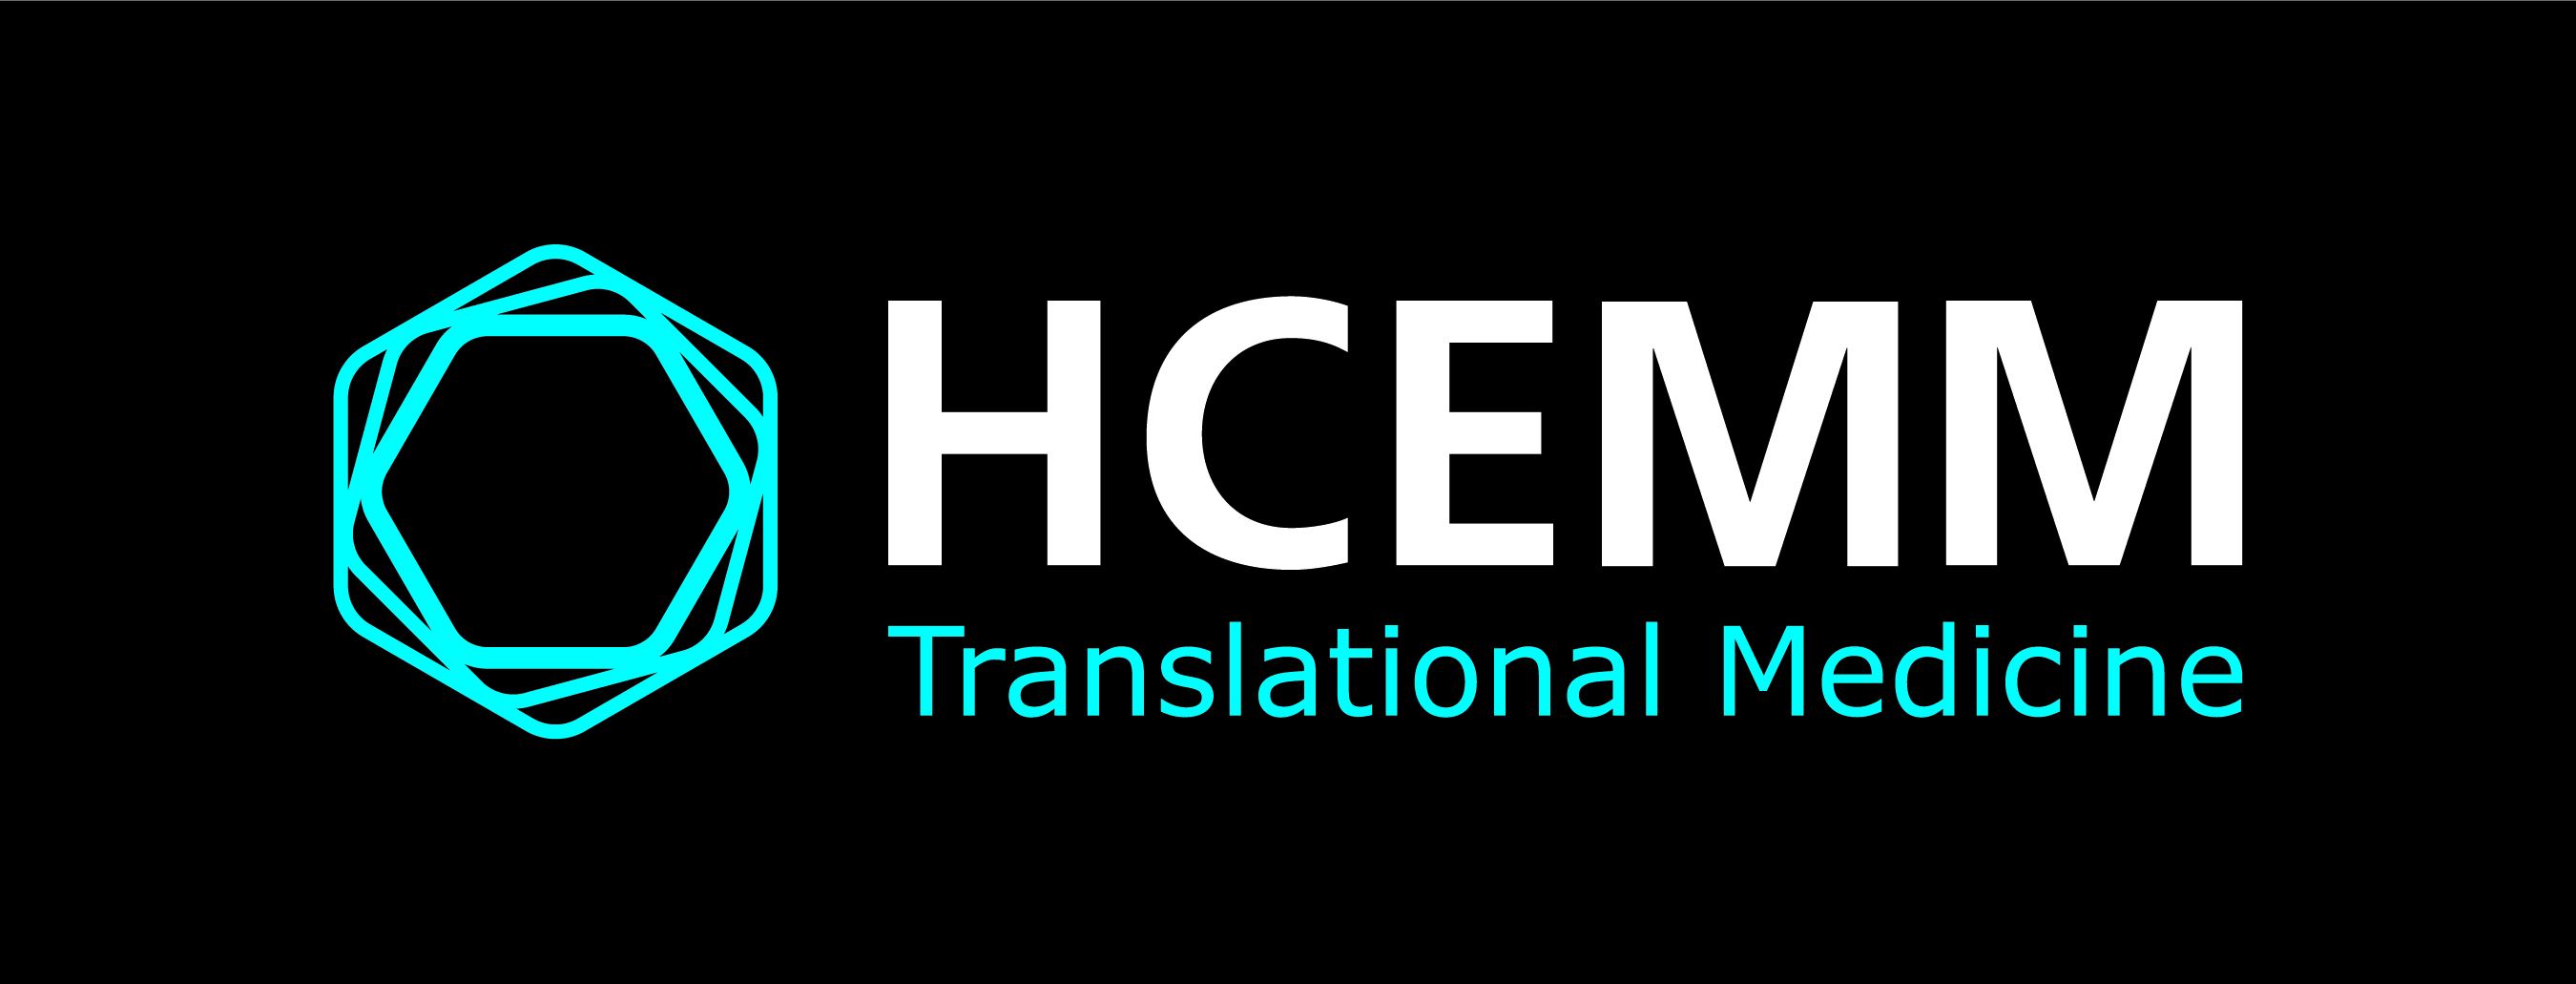 HCEMM Logo